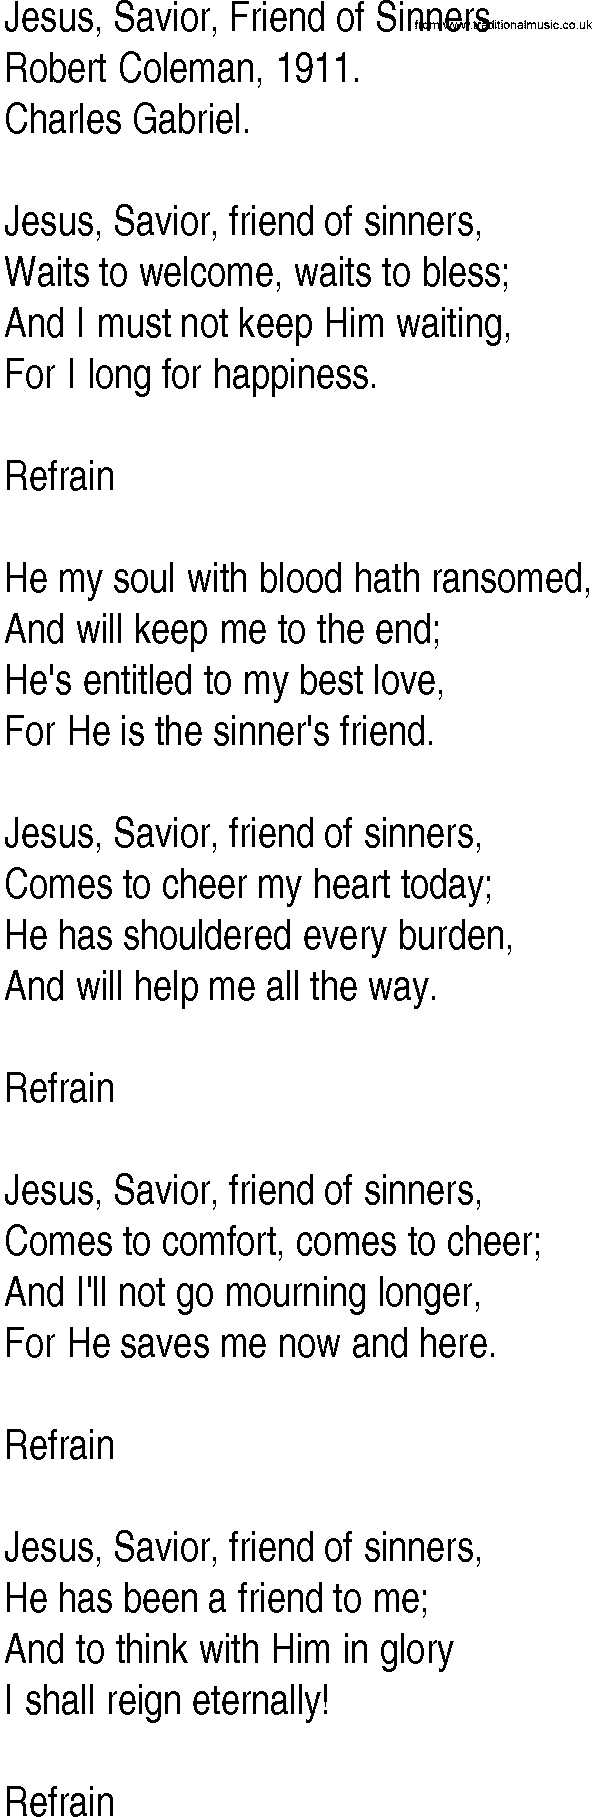 Hymn and Gospel Song: Jesus, Savior, Friend of Sinners by Robert Coleman lyrics